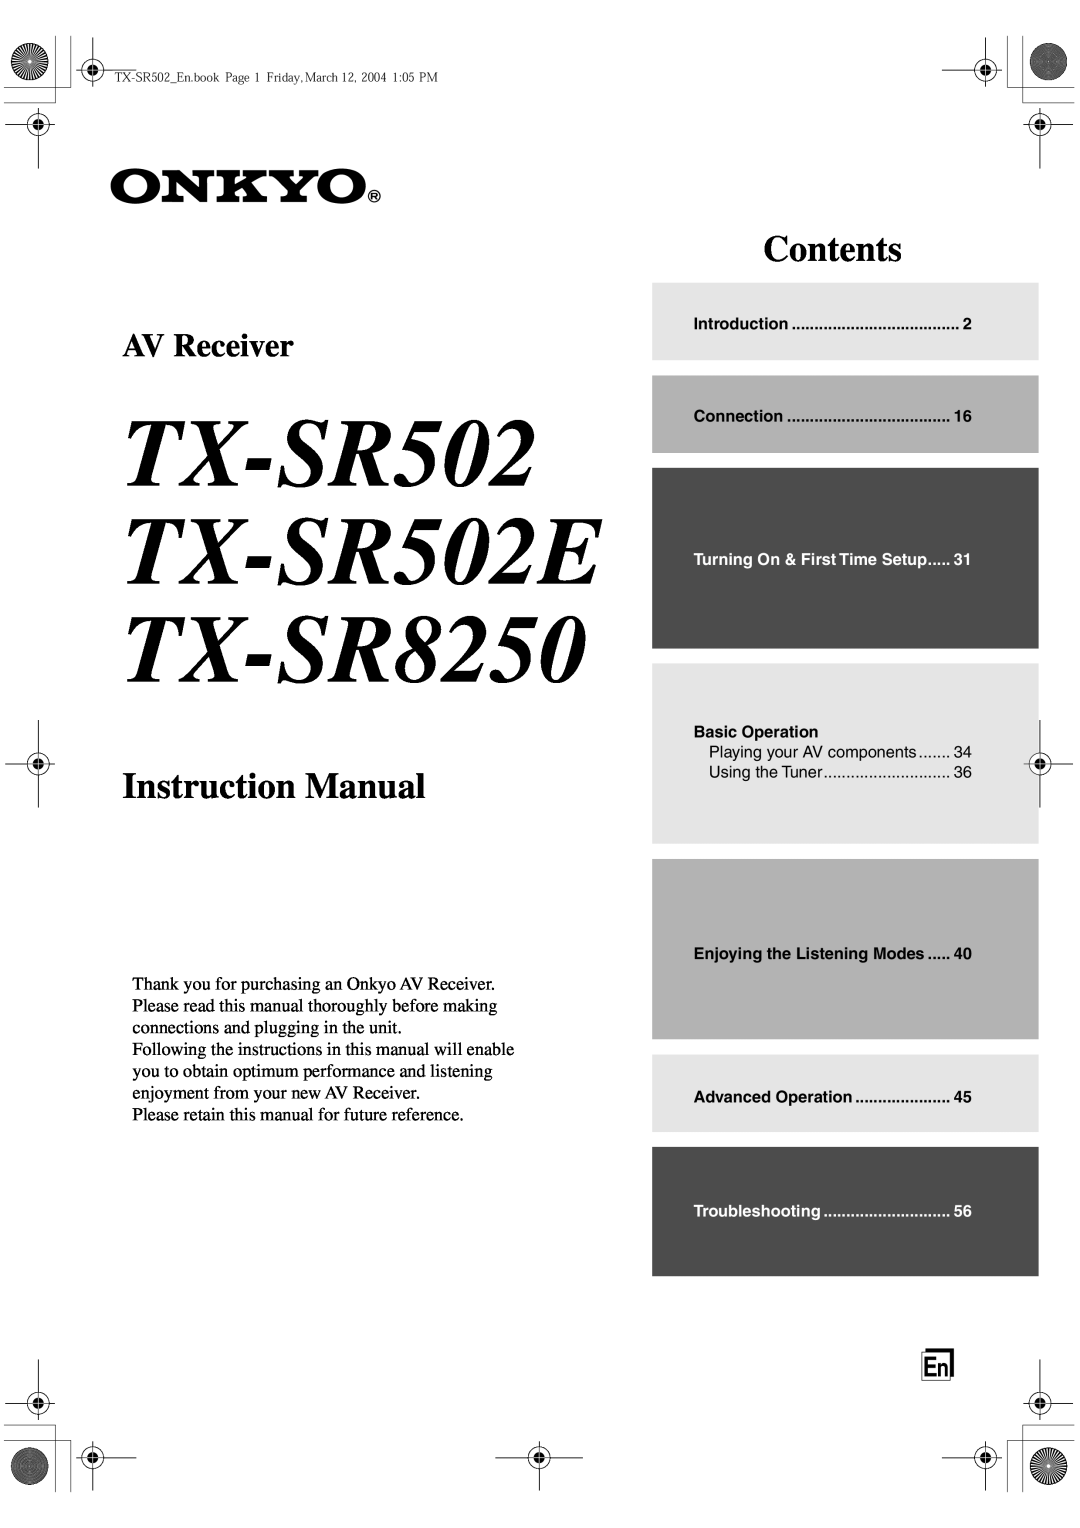 Onkyo instruction manual TX-SR502 TX-SR502E, Contents, AV Receiver 